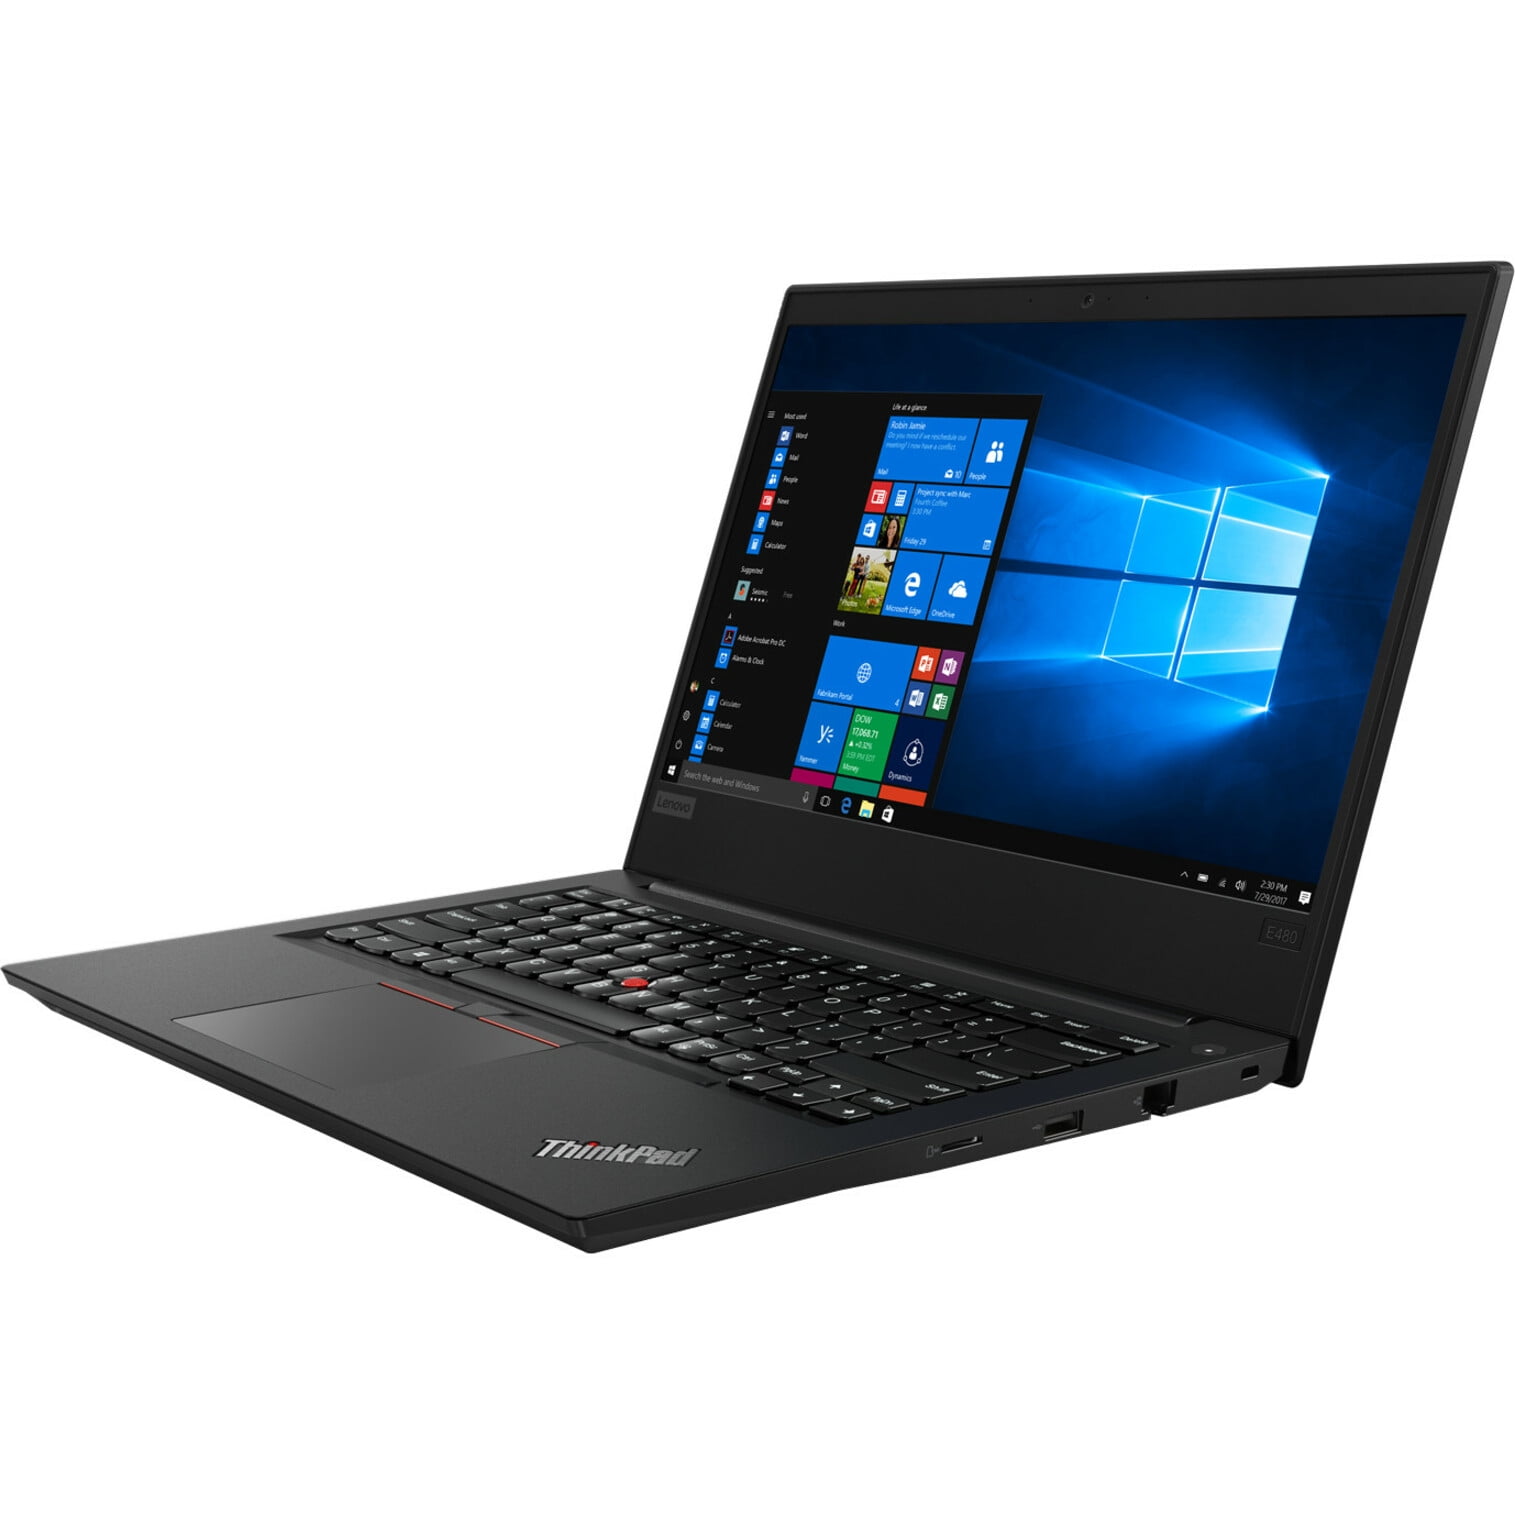 Lenovo ThinkPad " Laptop, Intel Core i3 iU, 4GB RAM, GB